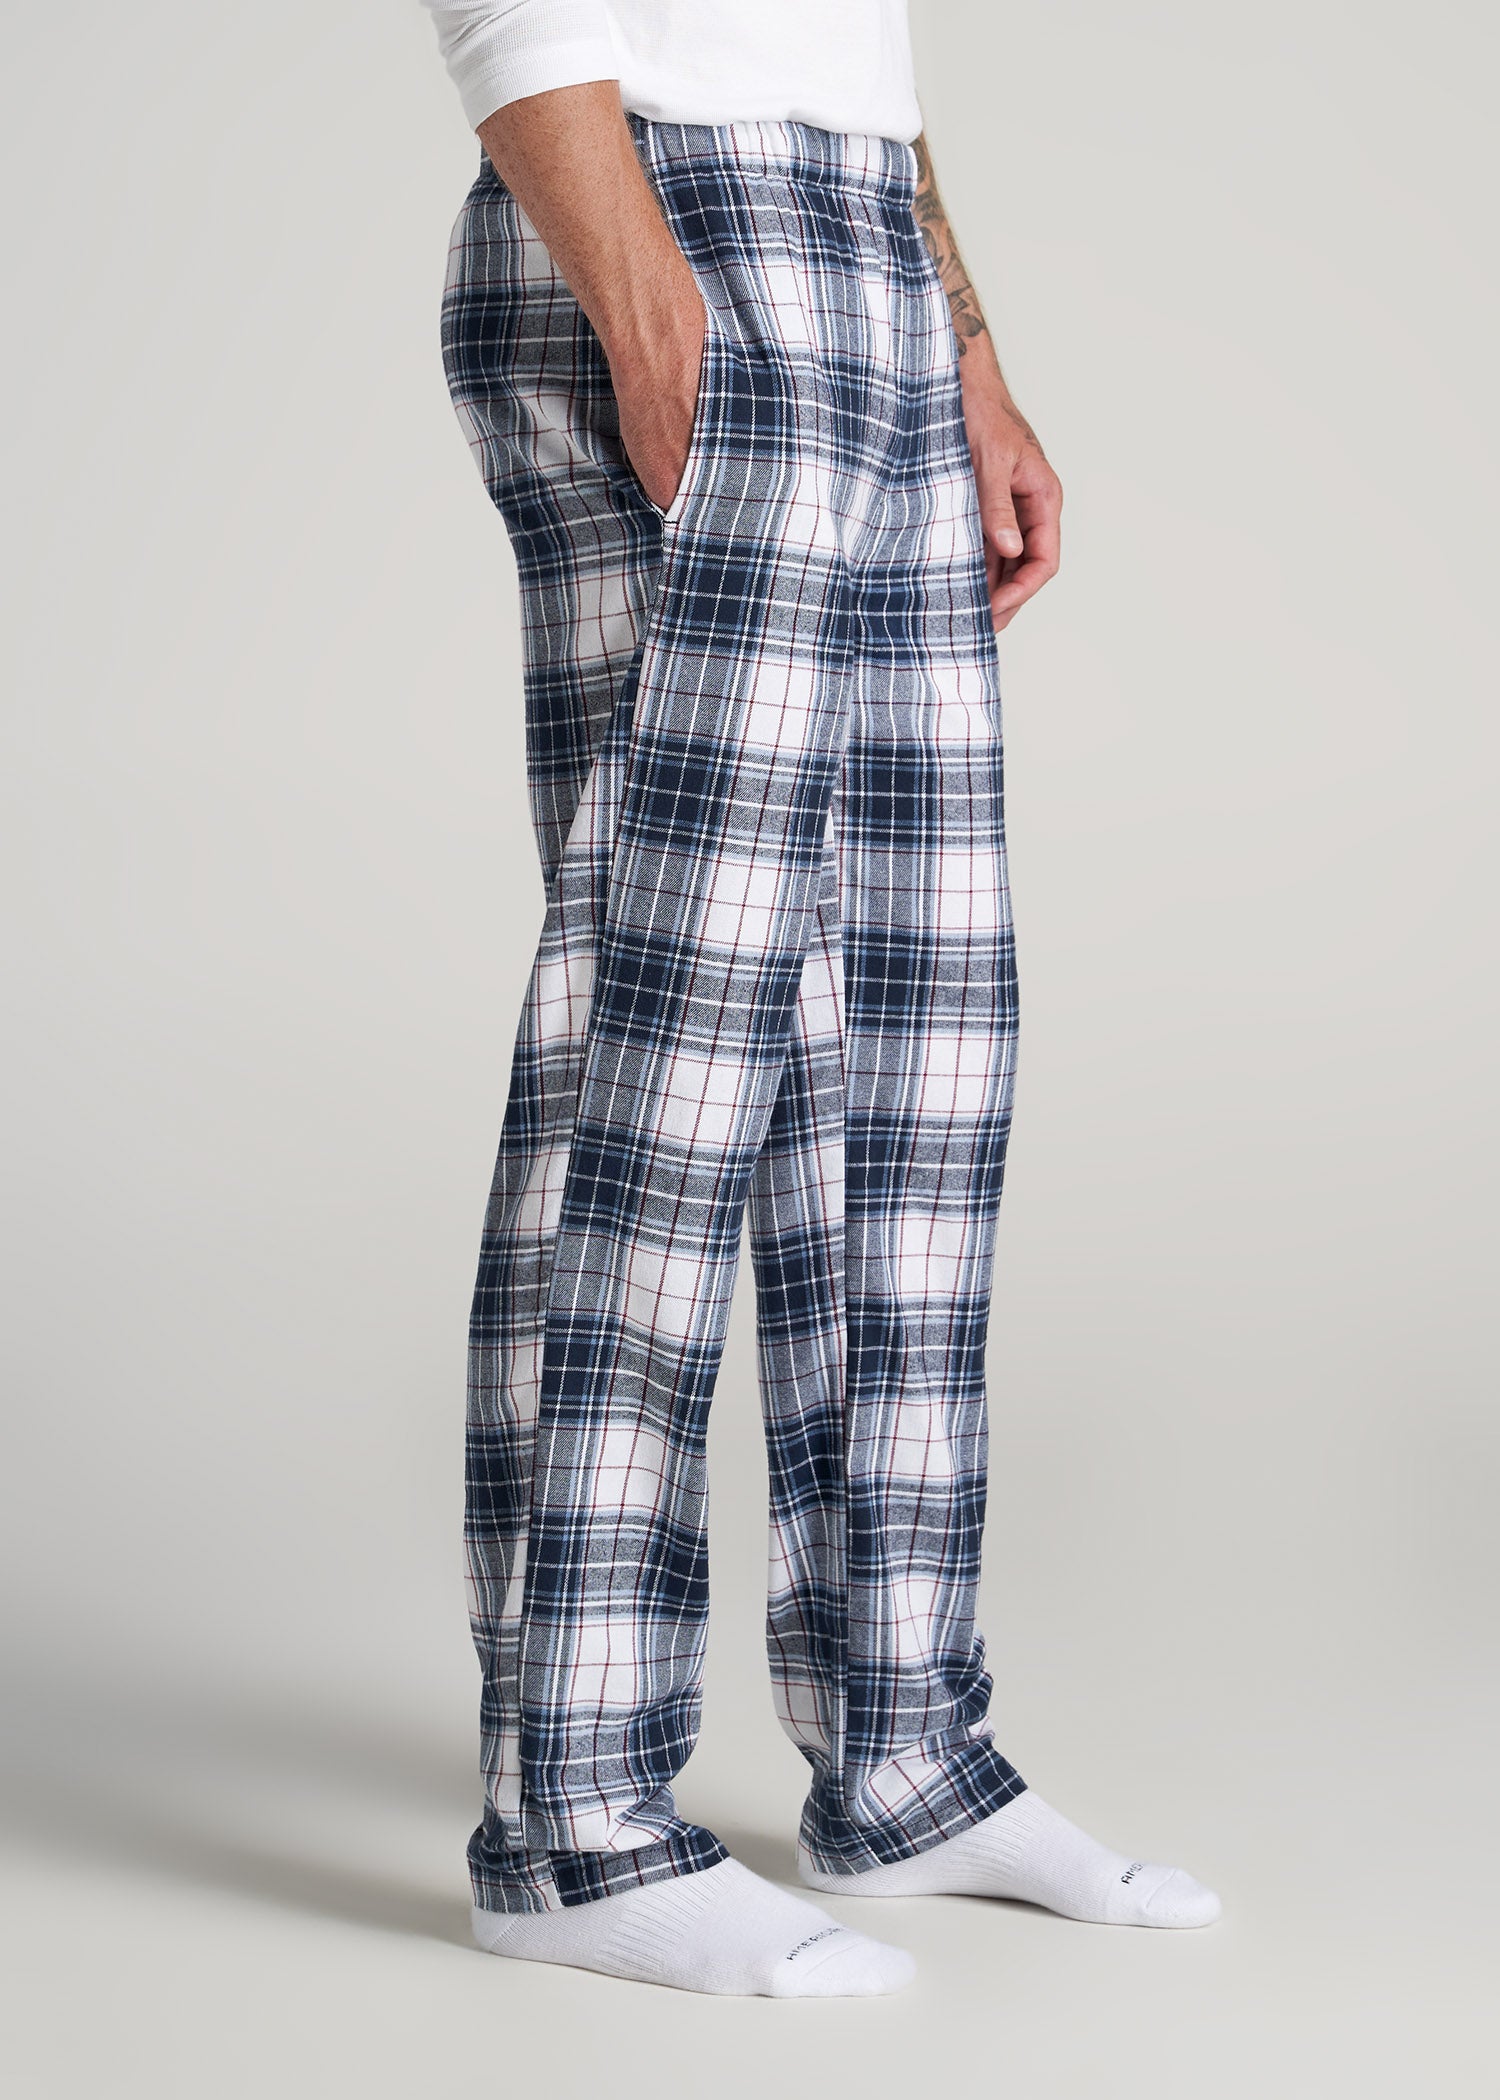 Polo Ralph Lauren Plaid Flannel Sleep Pants | Dillard's